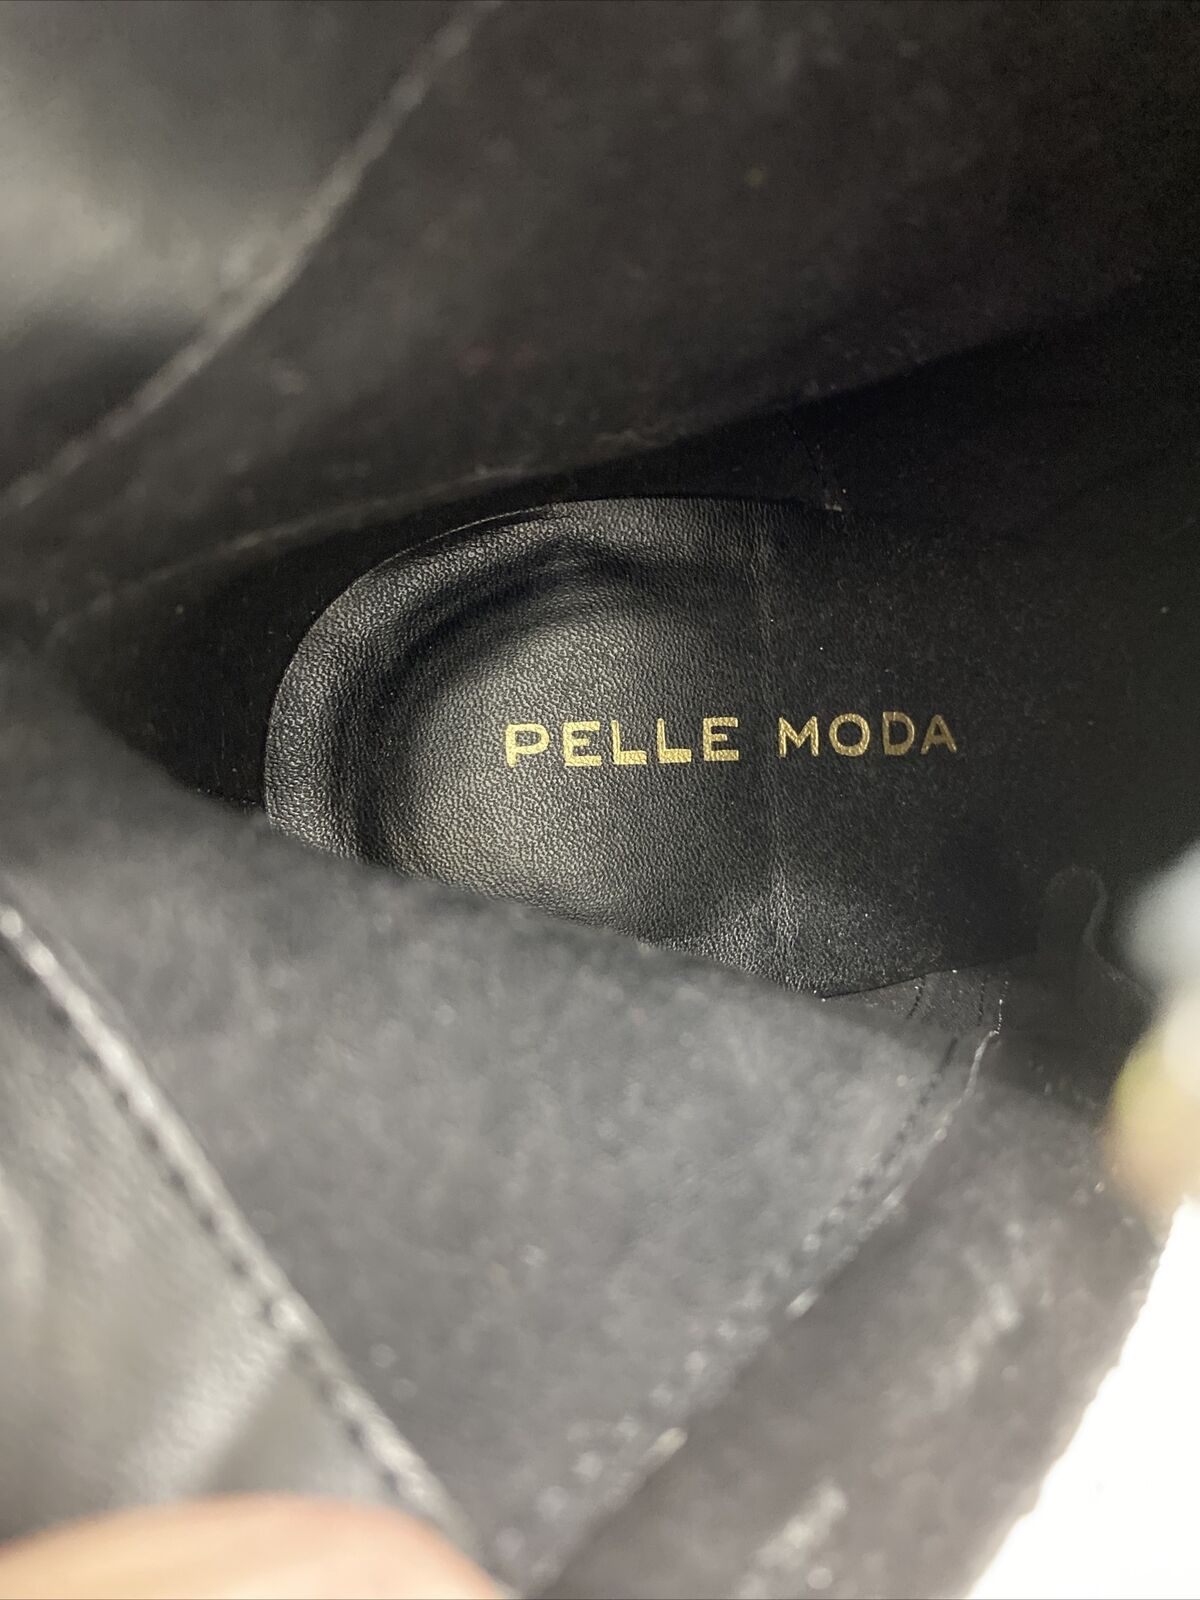 Pelle Moda YESNIA-SU Black Suede Heel Ankle Boots Women's Siz - beyond exchange